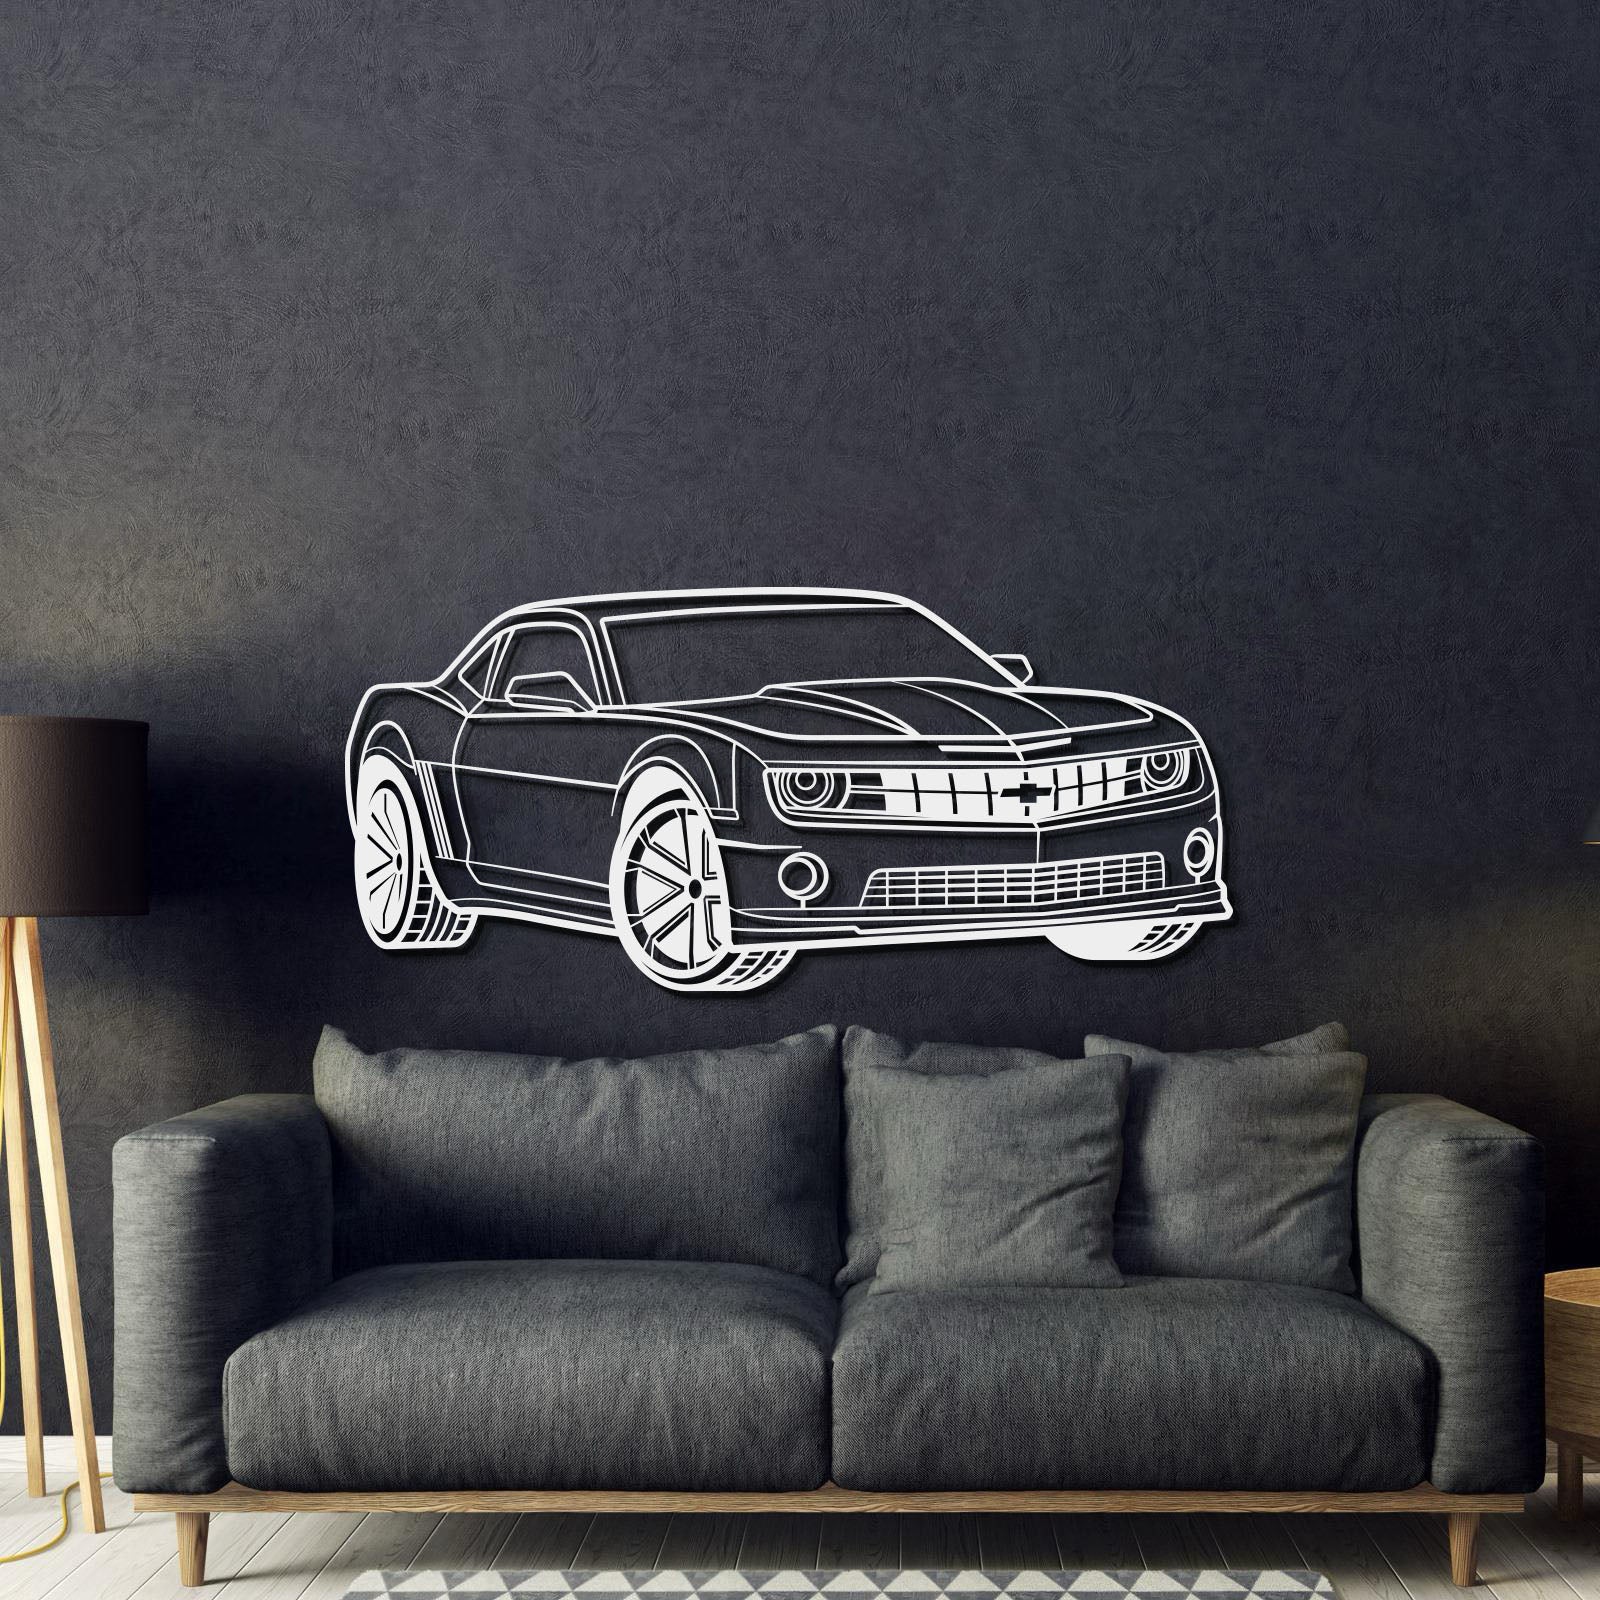 Camaro SS Perspective Metal Car Wall Art - MT0433